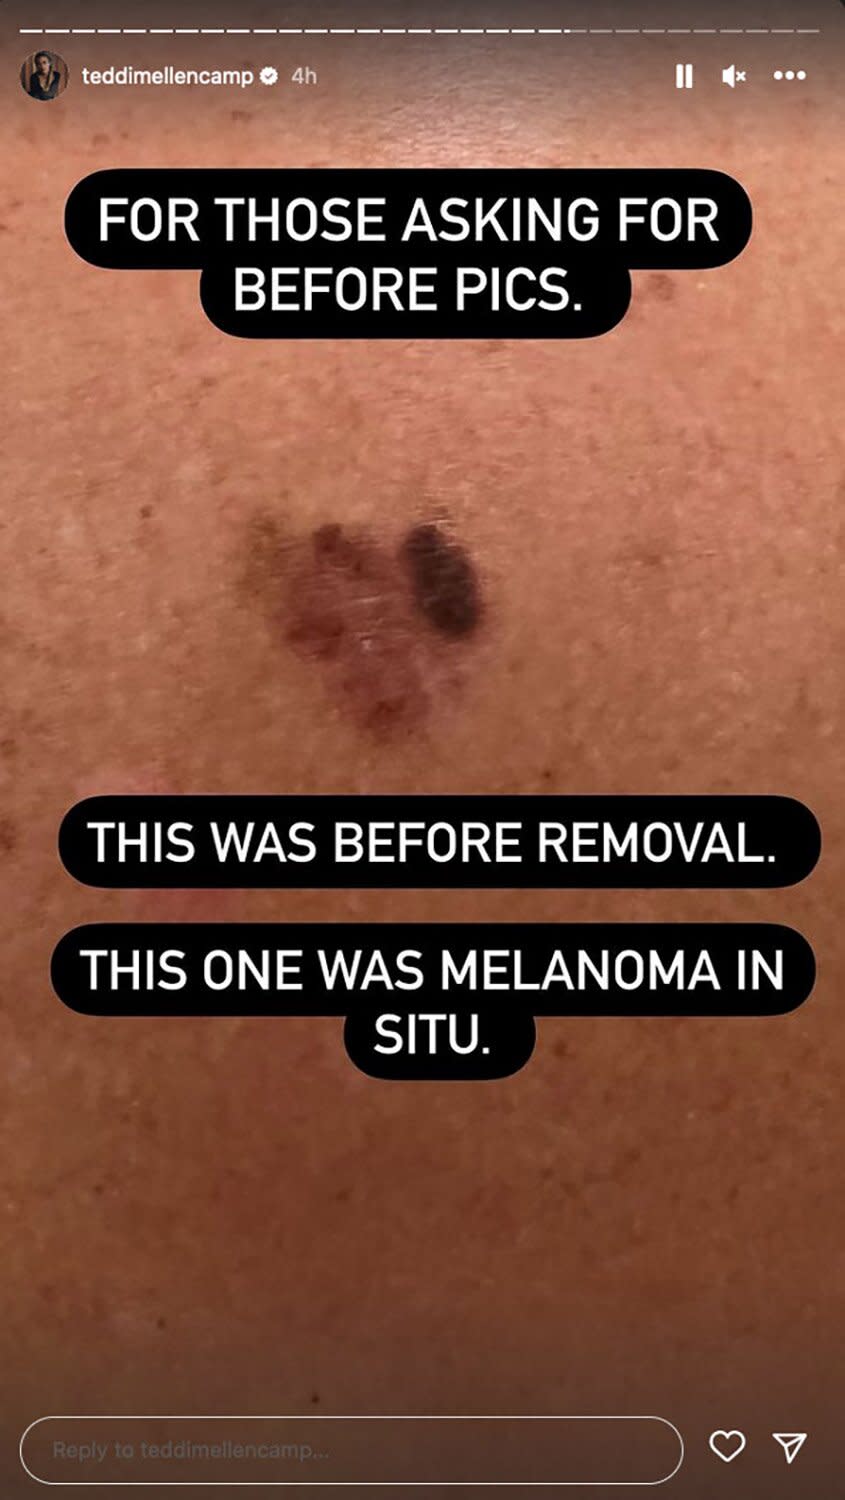 Teddi Mellencamp skin cancer diagnosis https://www.instagram.com/stories/teddimellencamp/2946807631327306448/